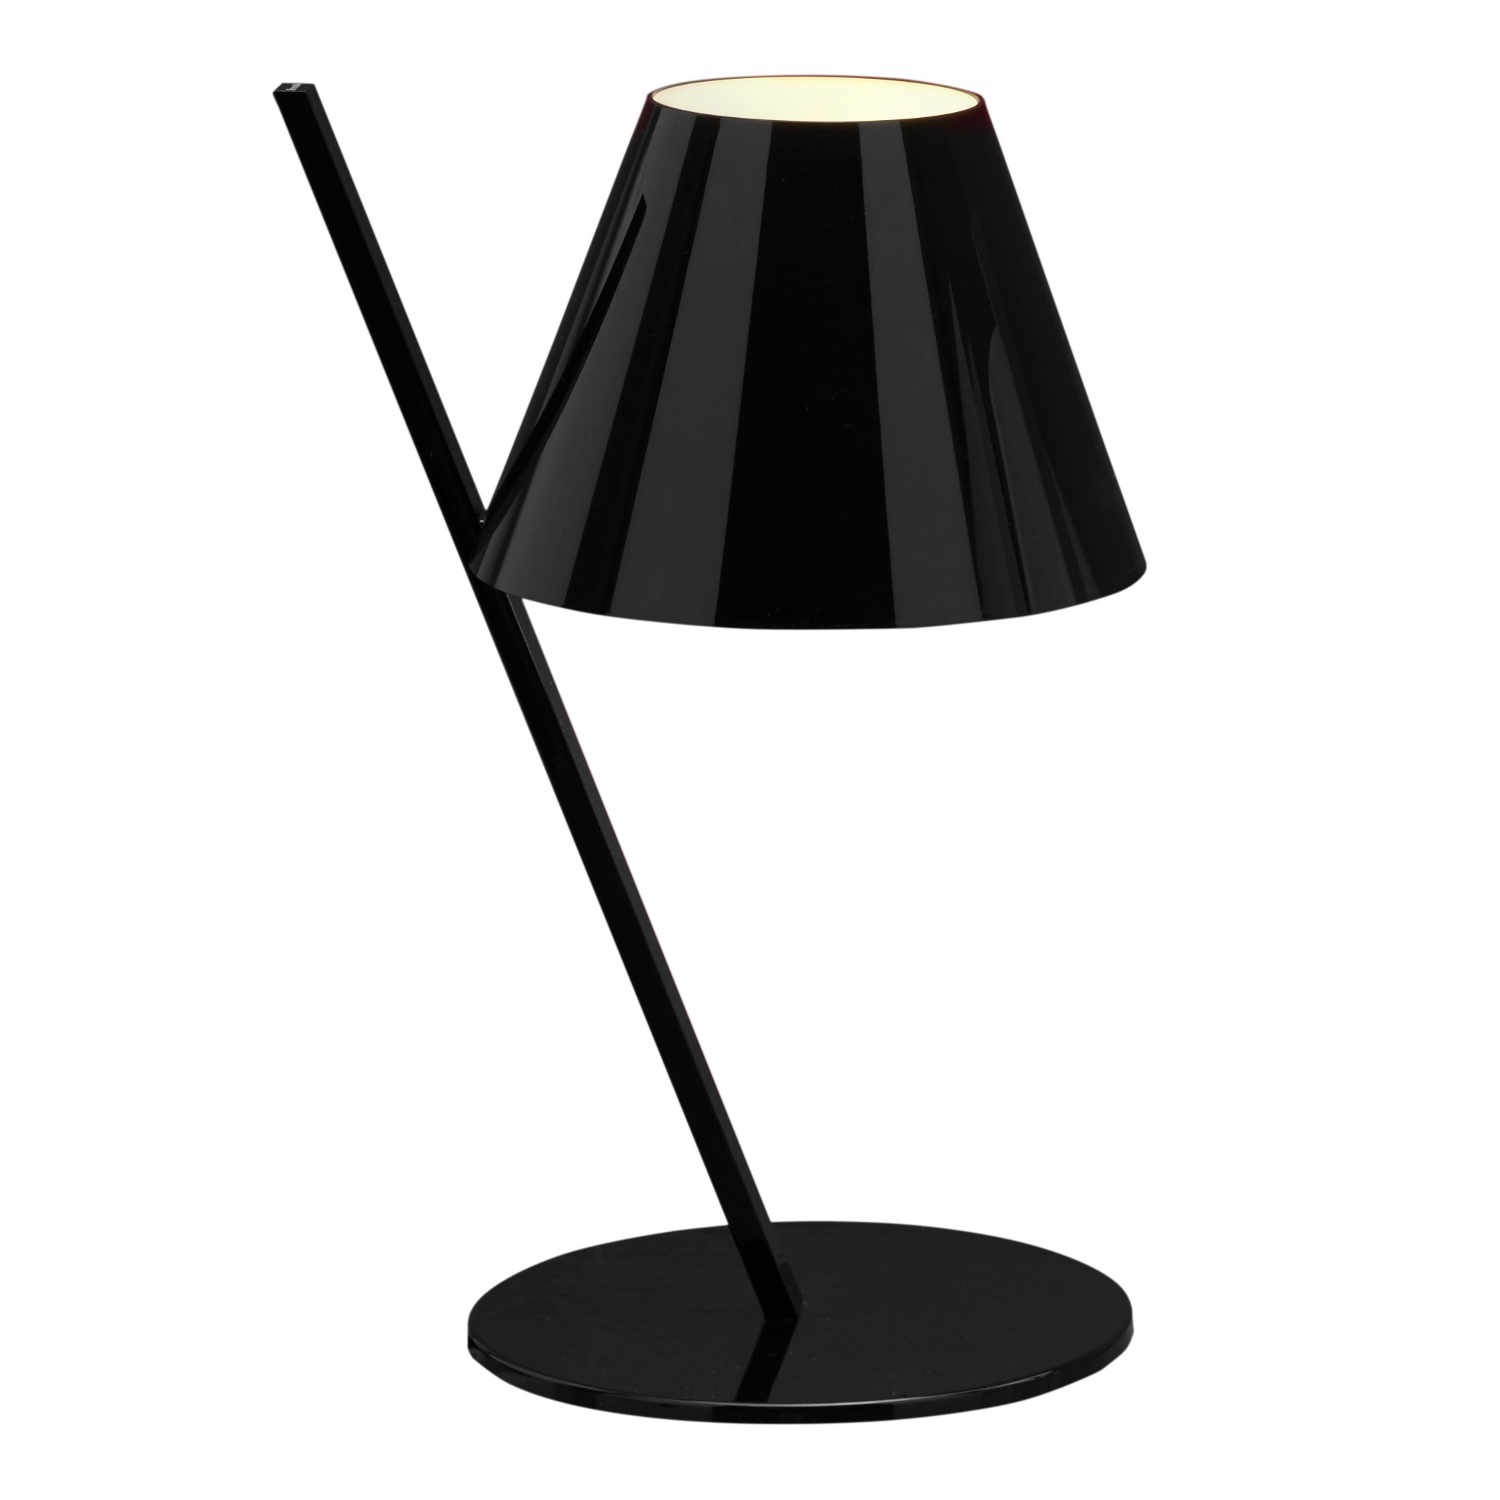 LA PETITE table lamp